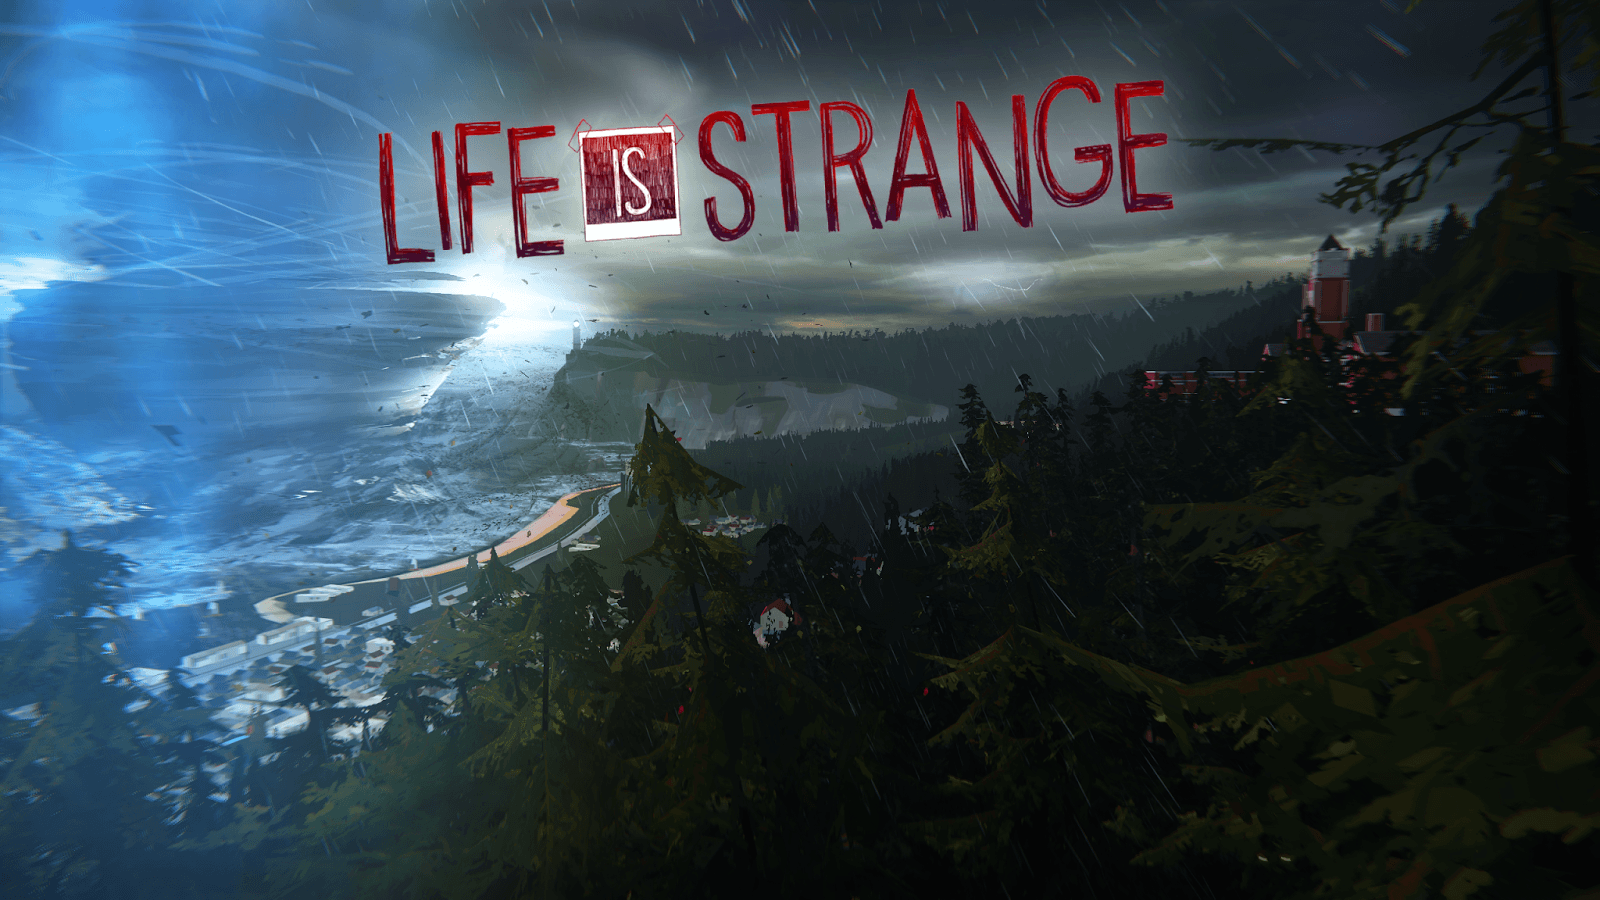 Life Is Strange Wallpaper, Life Is Strange Image. Original